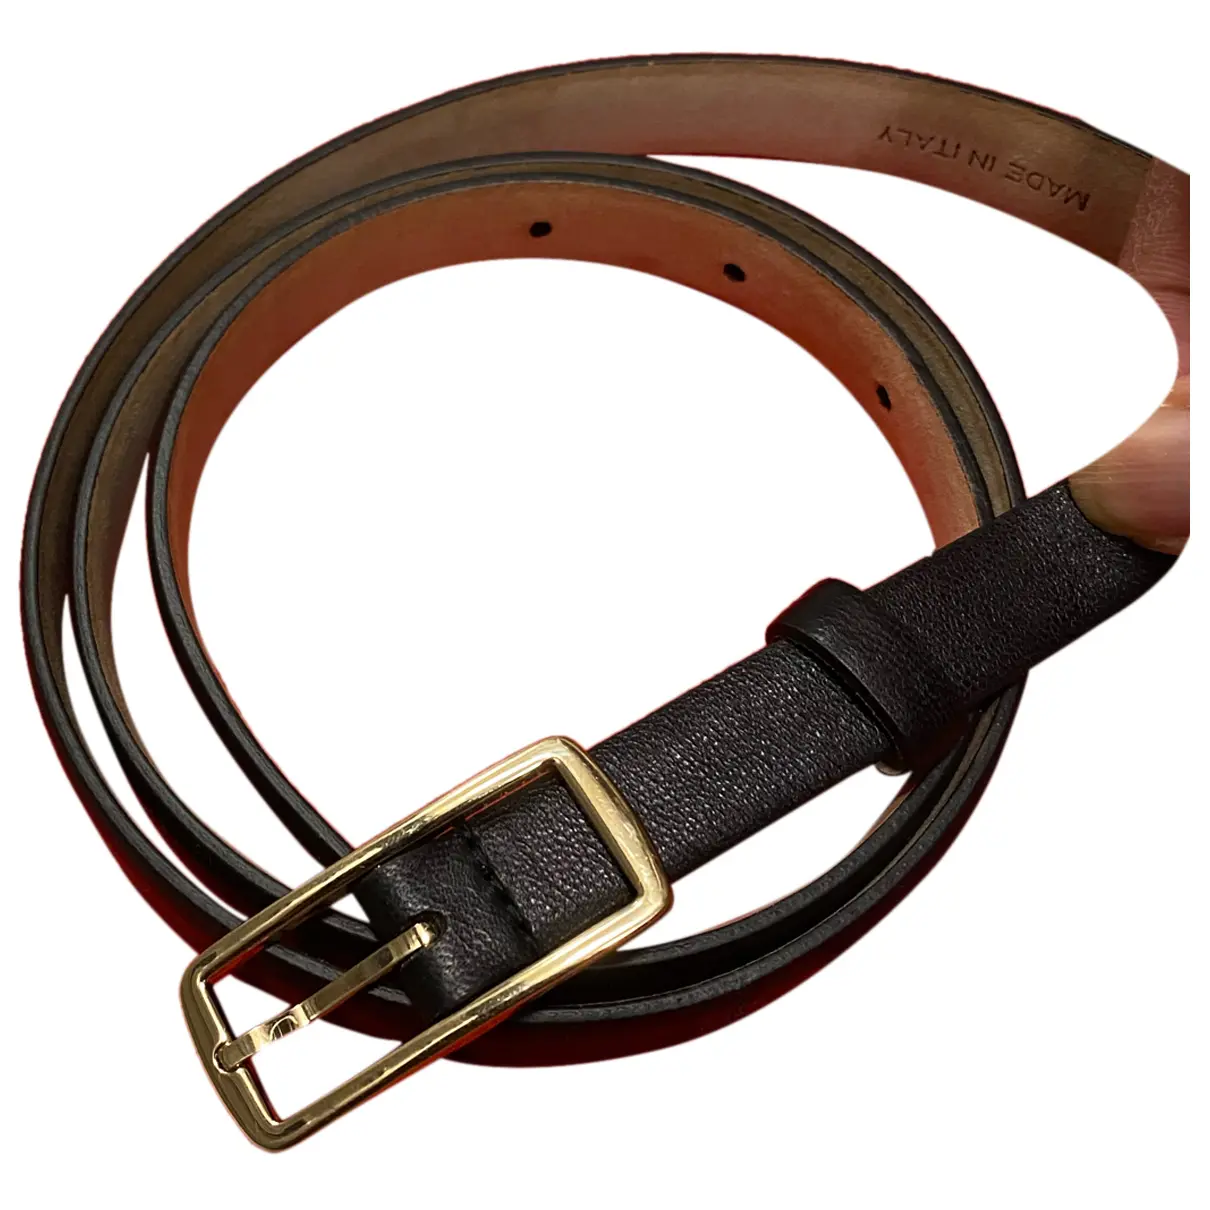 Leather belt Valentino Garavani